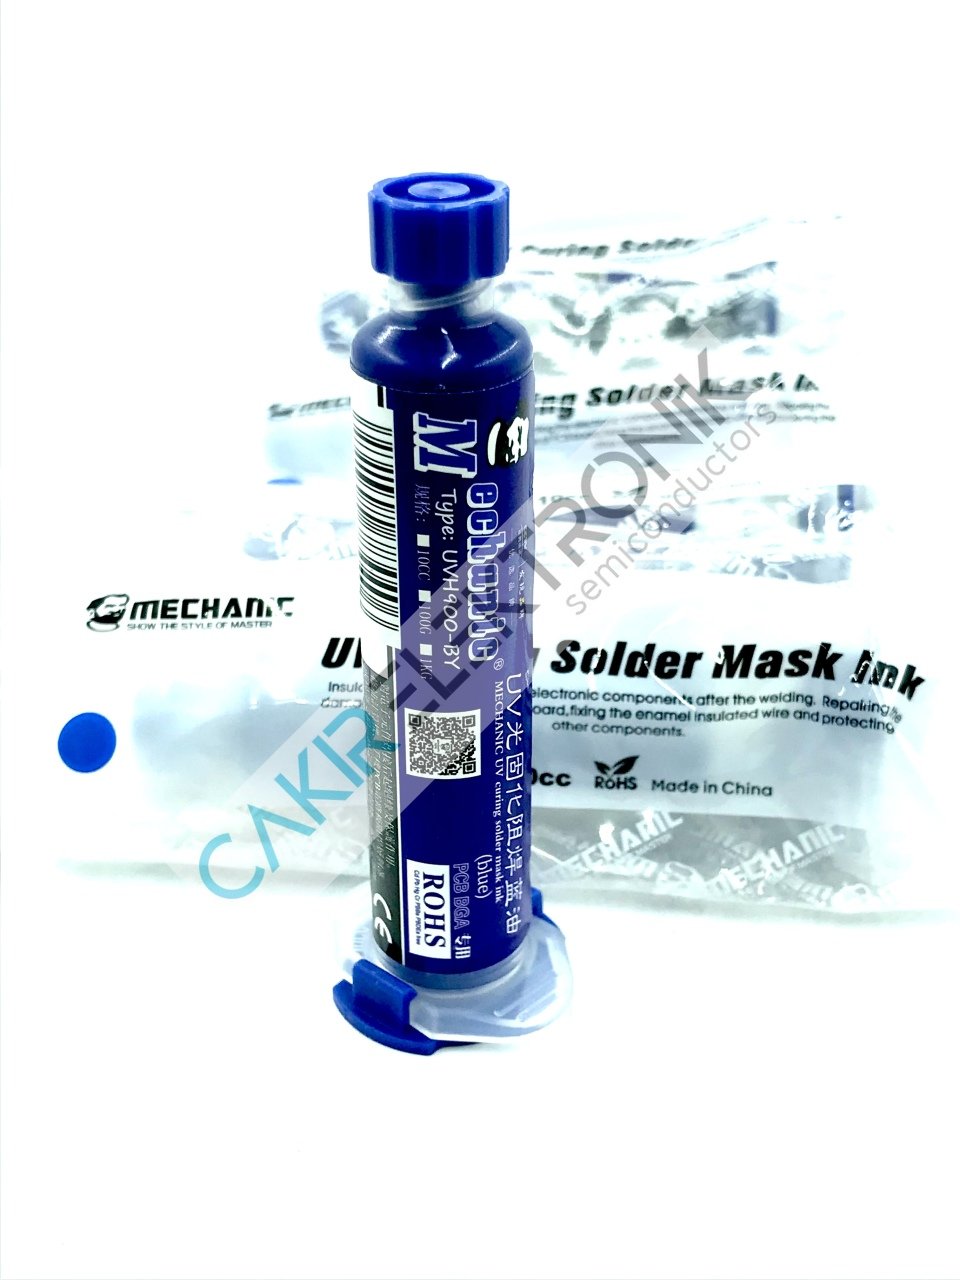 PCB BOYASI MAVİ  - MECHANIC UV curing solder mask ink,  LVH900-BY  10CC  blue